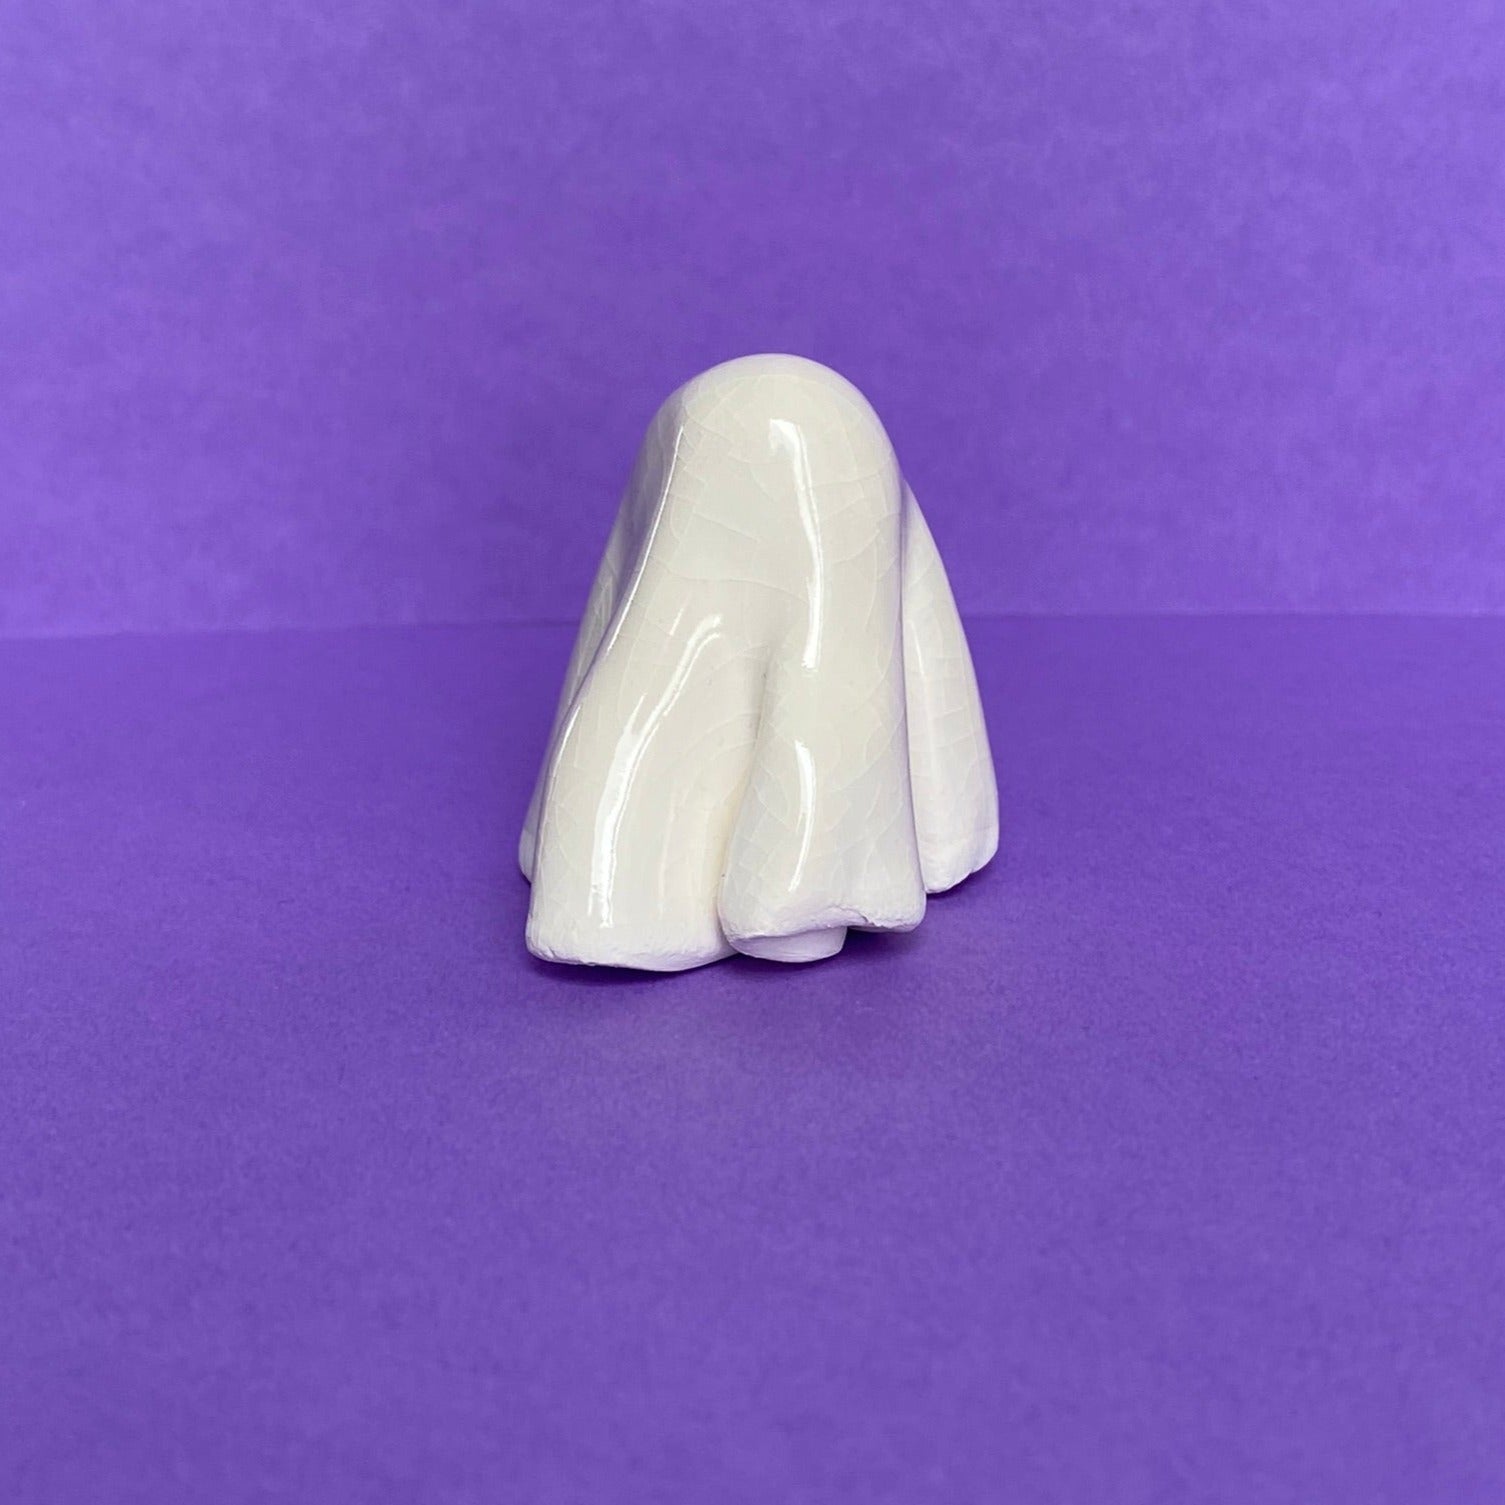 Talila - Handmade White Ghost Figurine Politely Declining